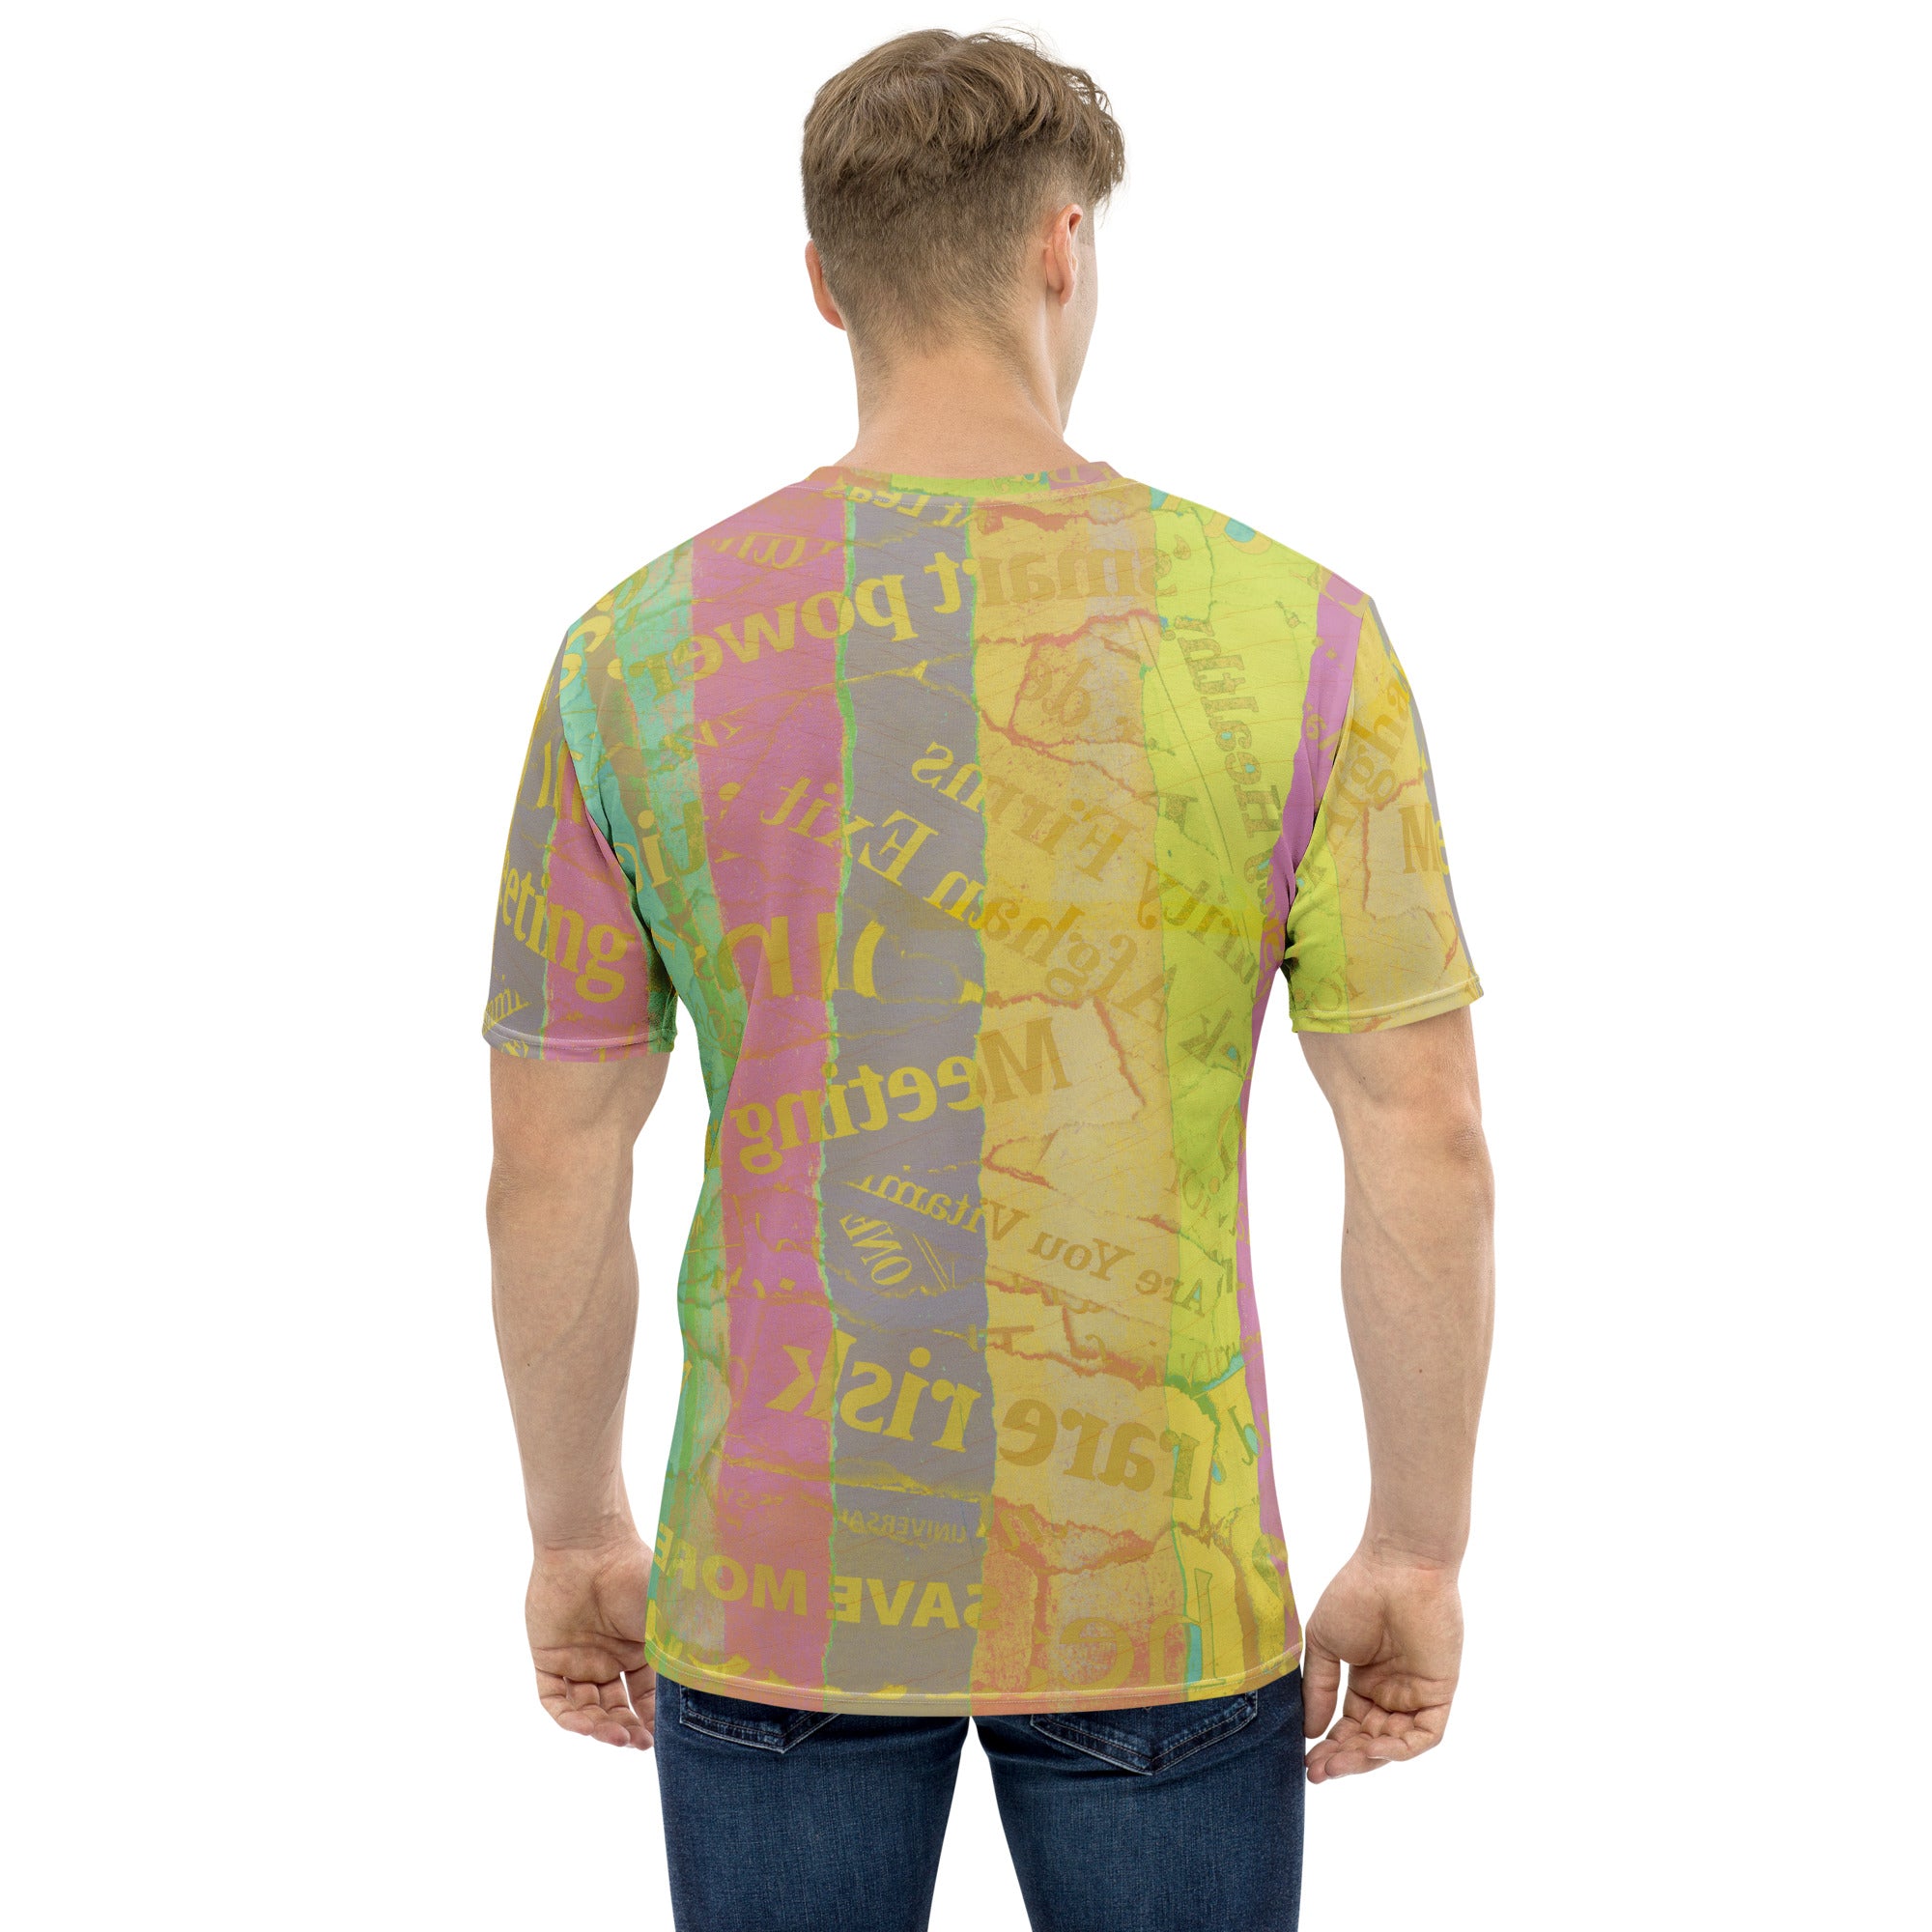 Men wearing vibrant psychedelic splash crew neck t-shirt, front view.